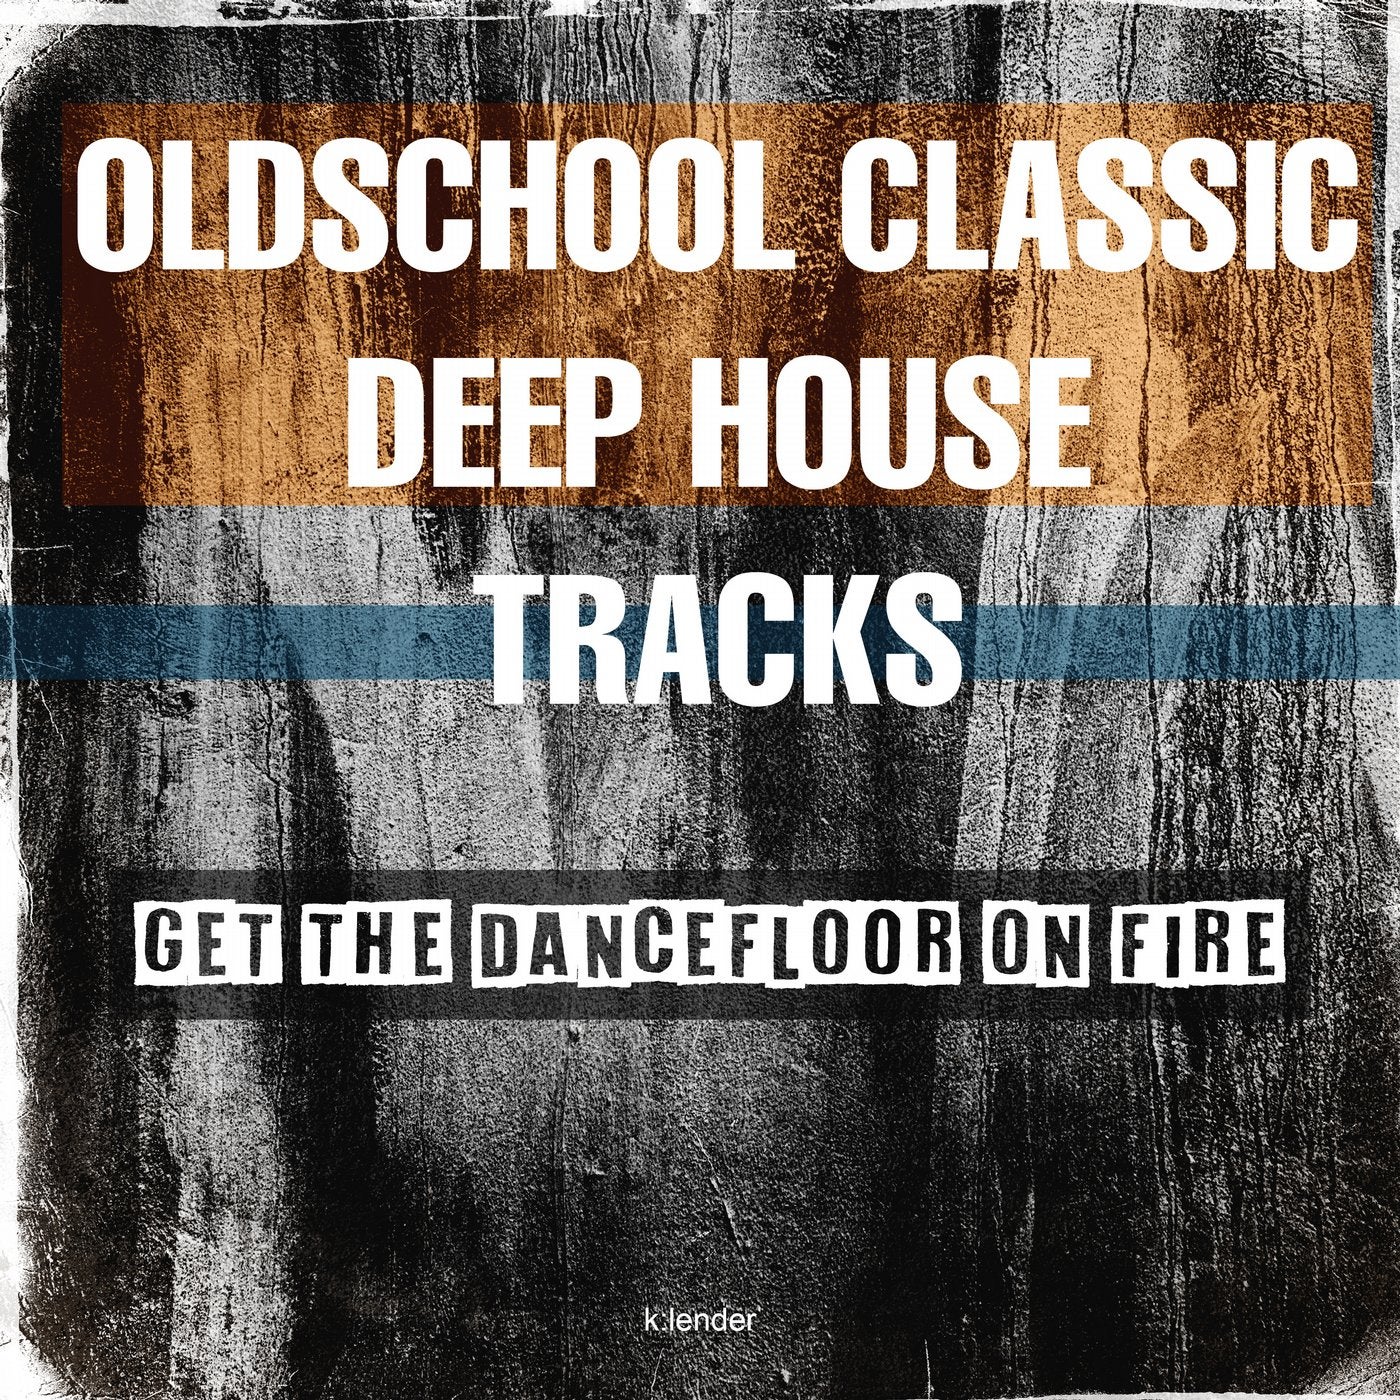 Oldschool Classic Deep House Tracks Get the Dancefloor on Fire